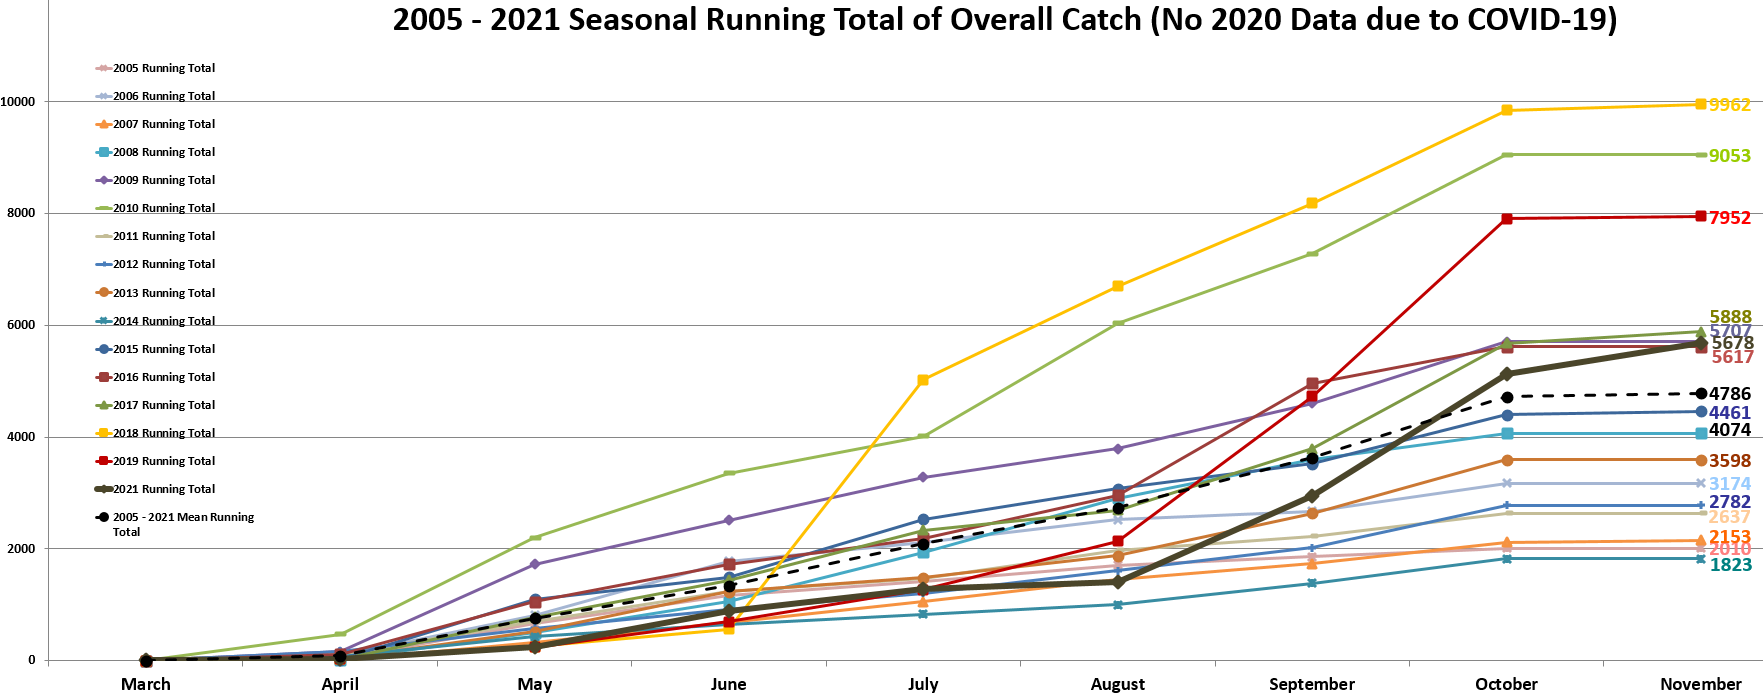 Total Catch Each Season